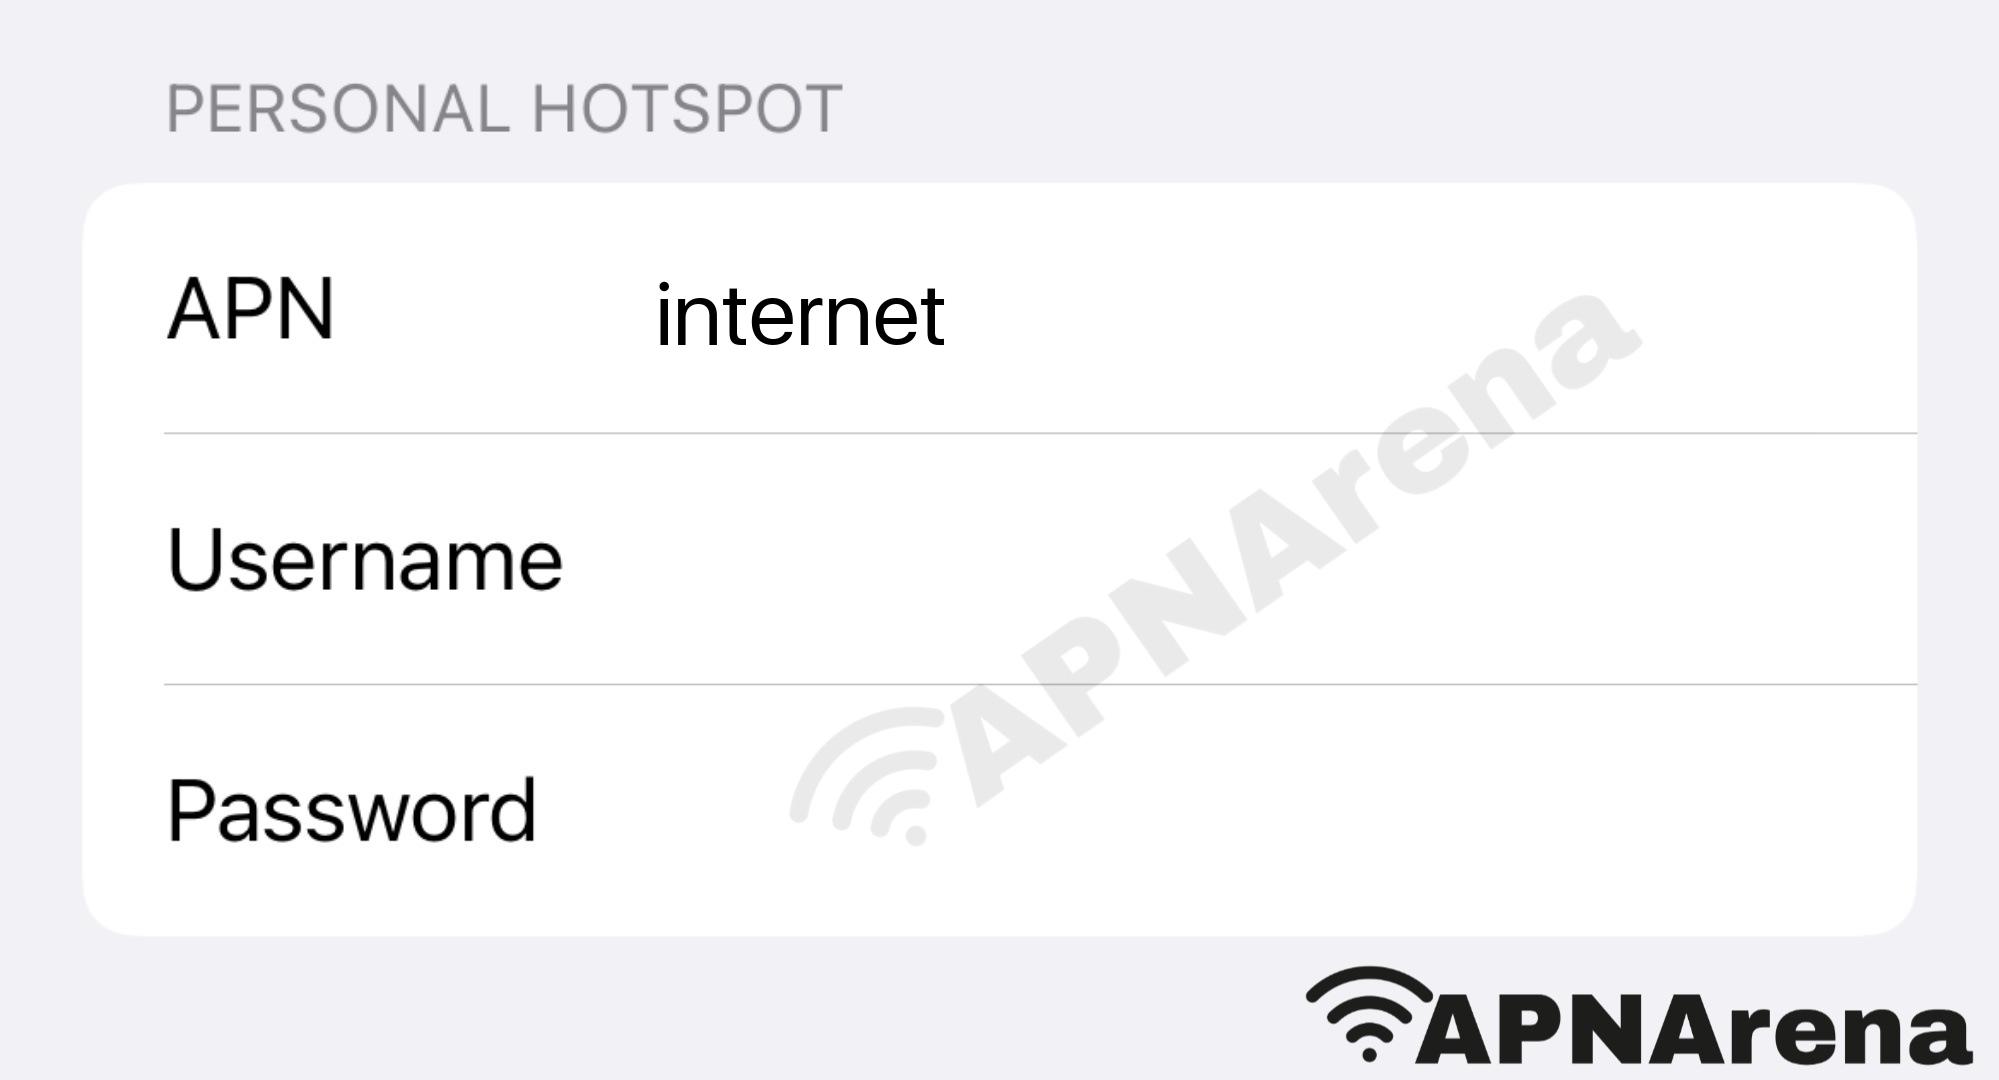 A1 Croatia (Vip, Vipnet) Personal Hotspot Settings for iPhone